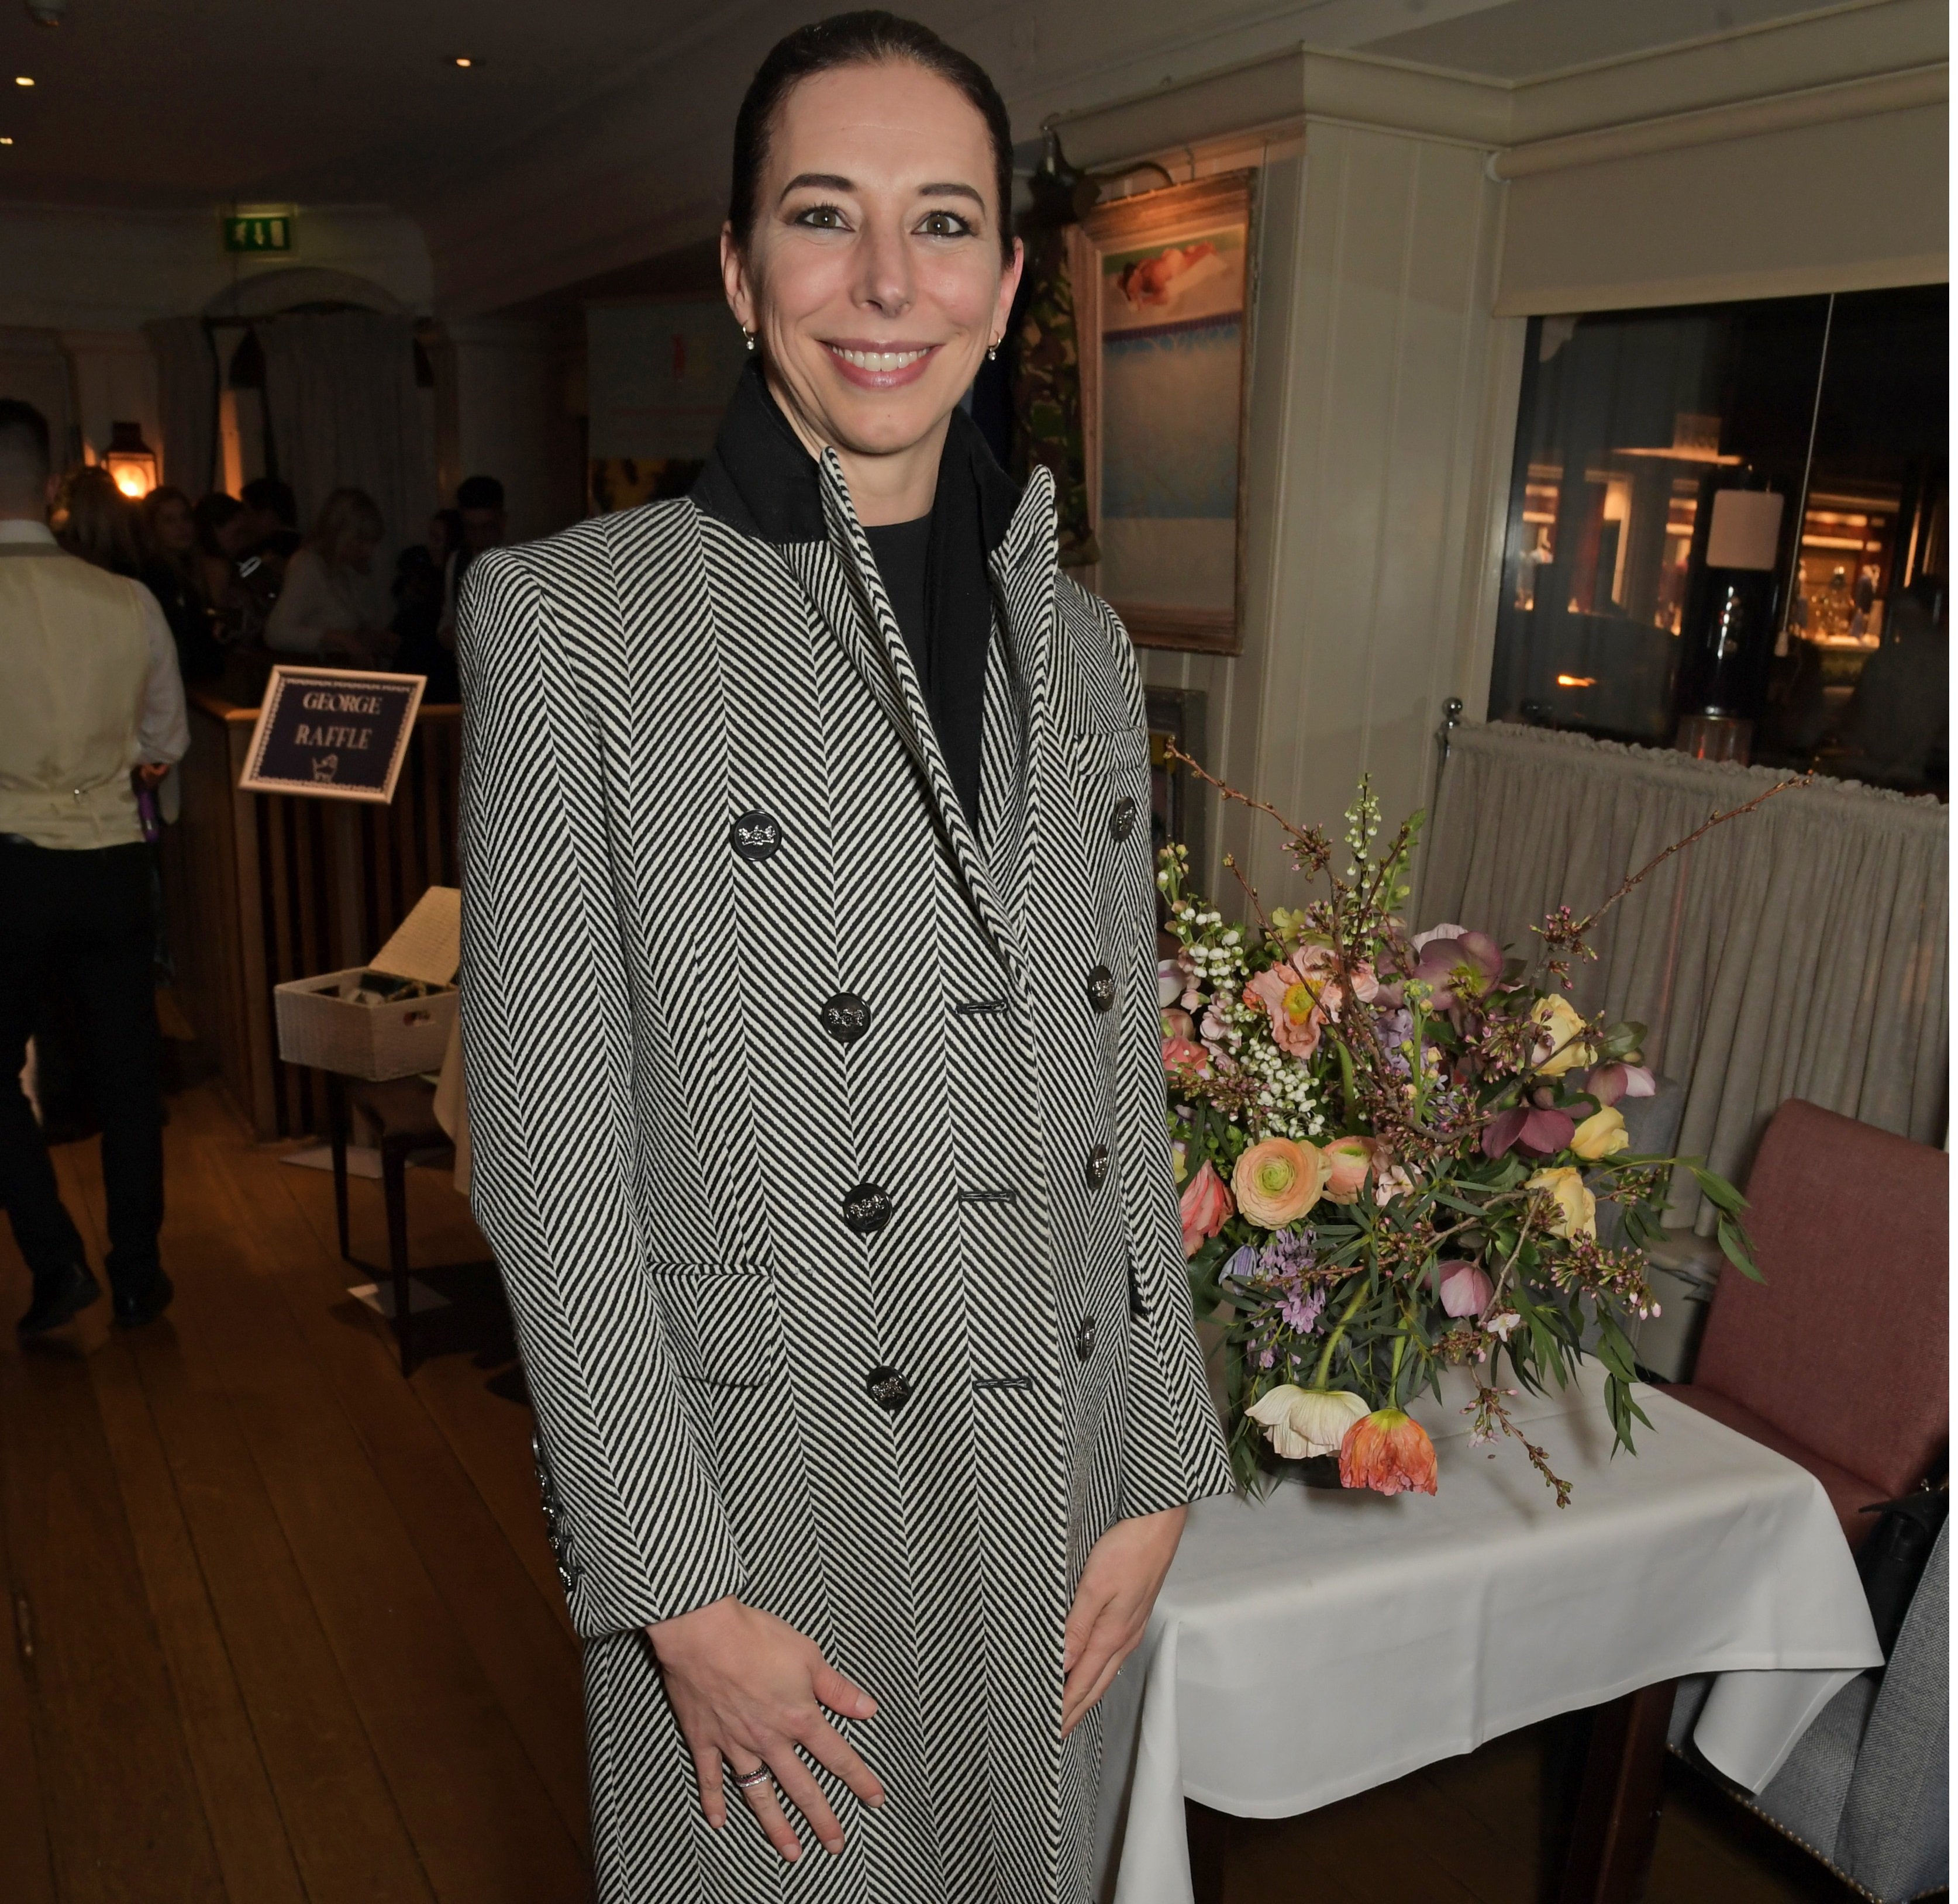 Kristina Blahnik en almuerzo del George Club de Londres en febrero de 2020. | Foto: Getty Images